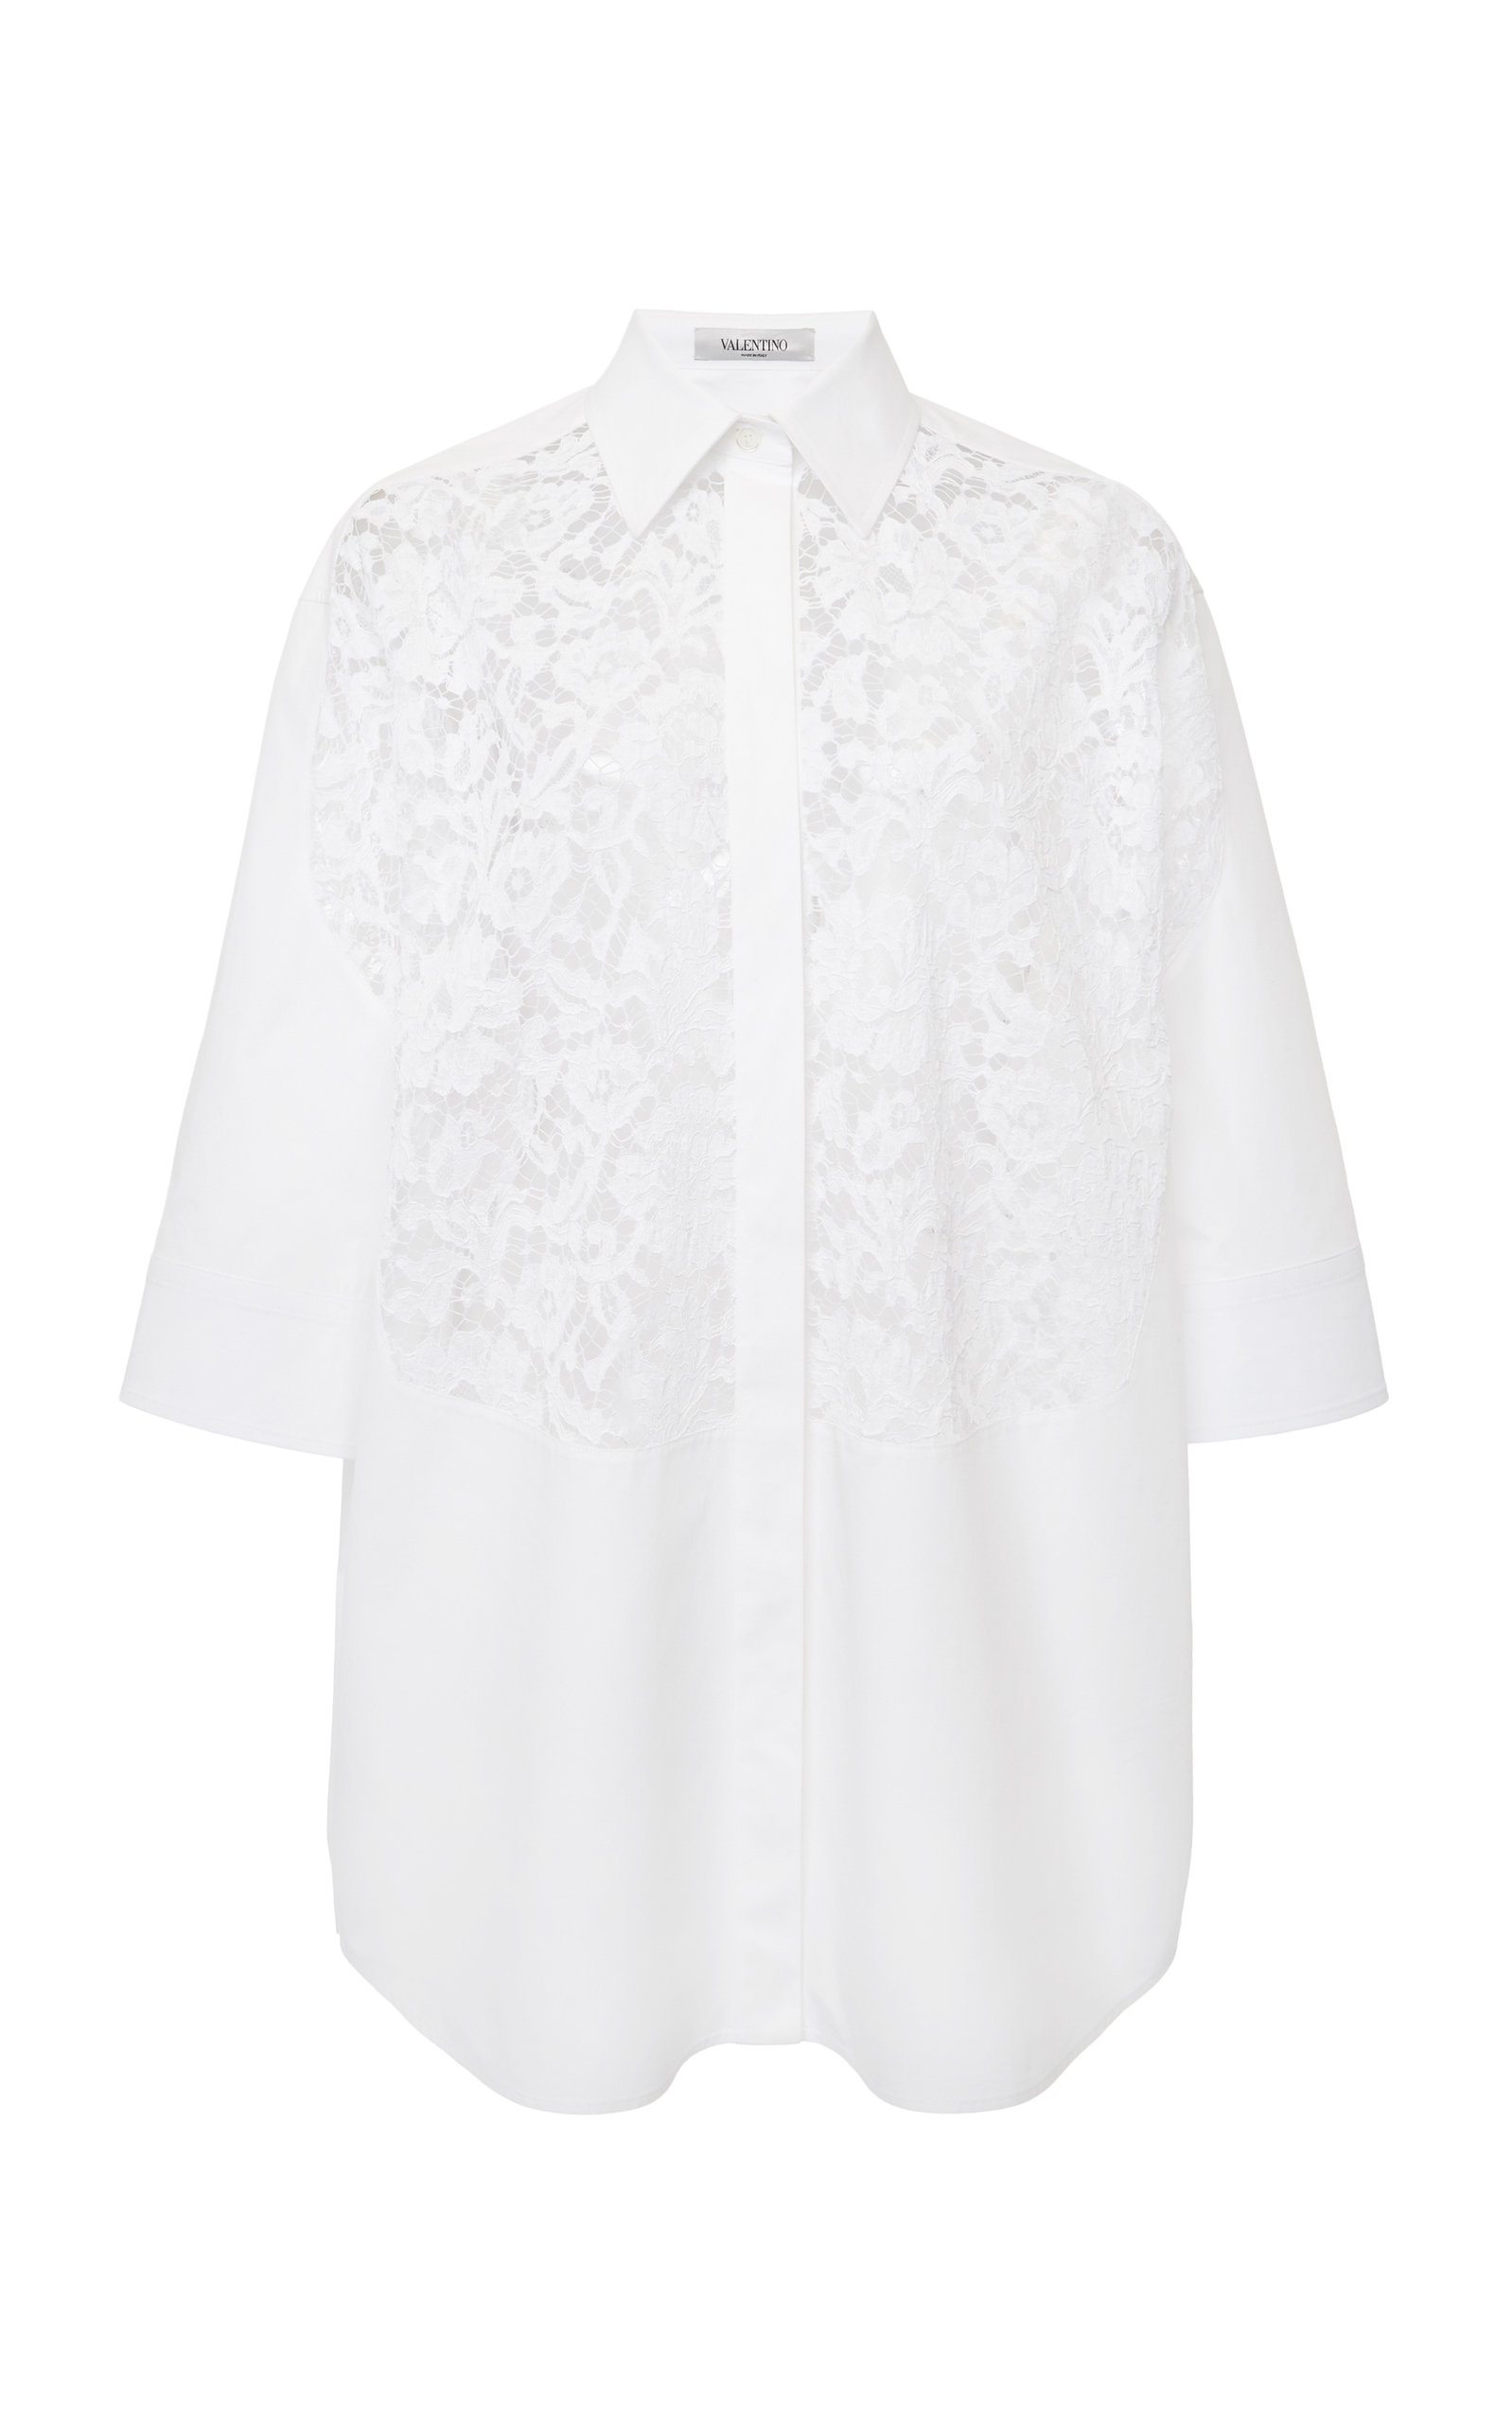 Valentino - Women's Lace-Trimmed Cotton Shirt - White - IT 36 - Moda Operandi